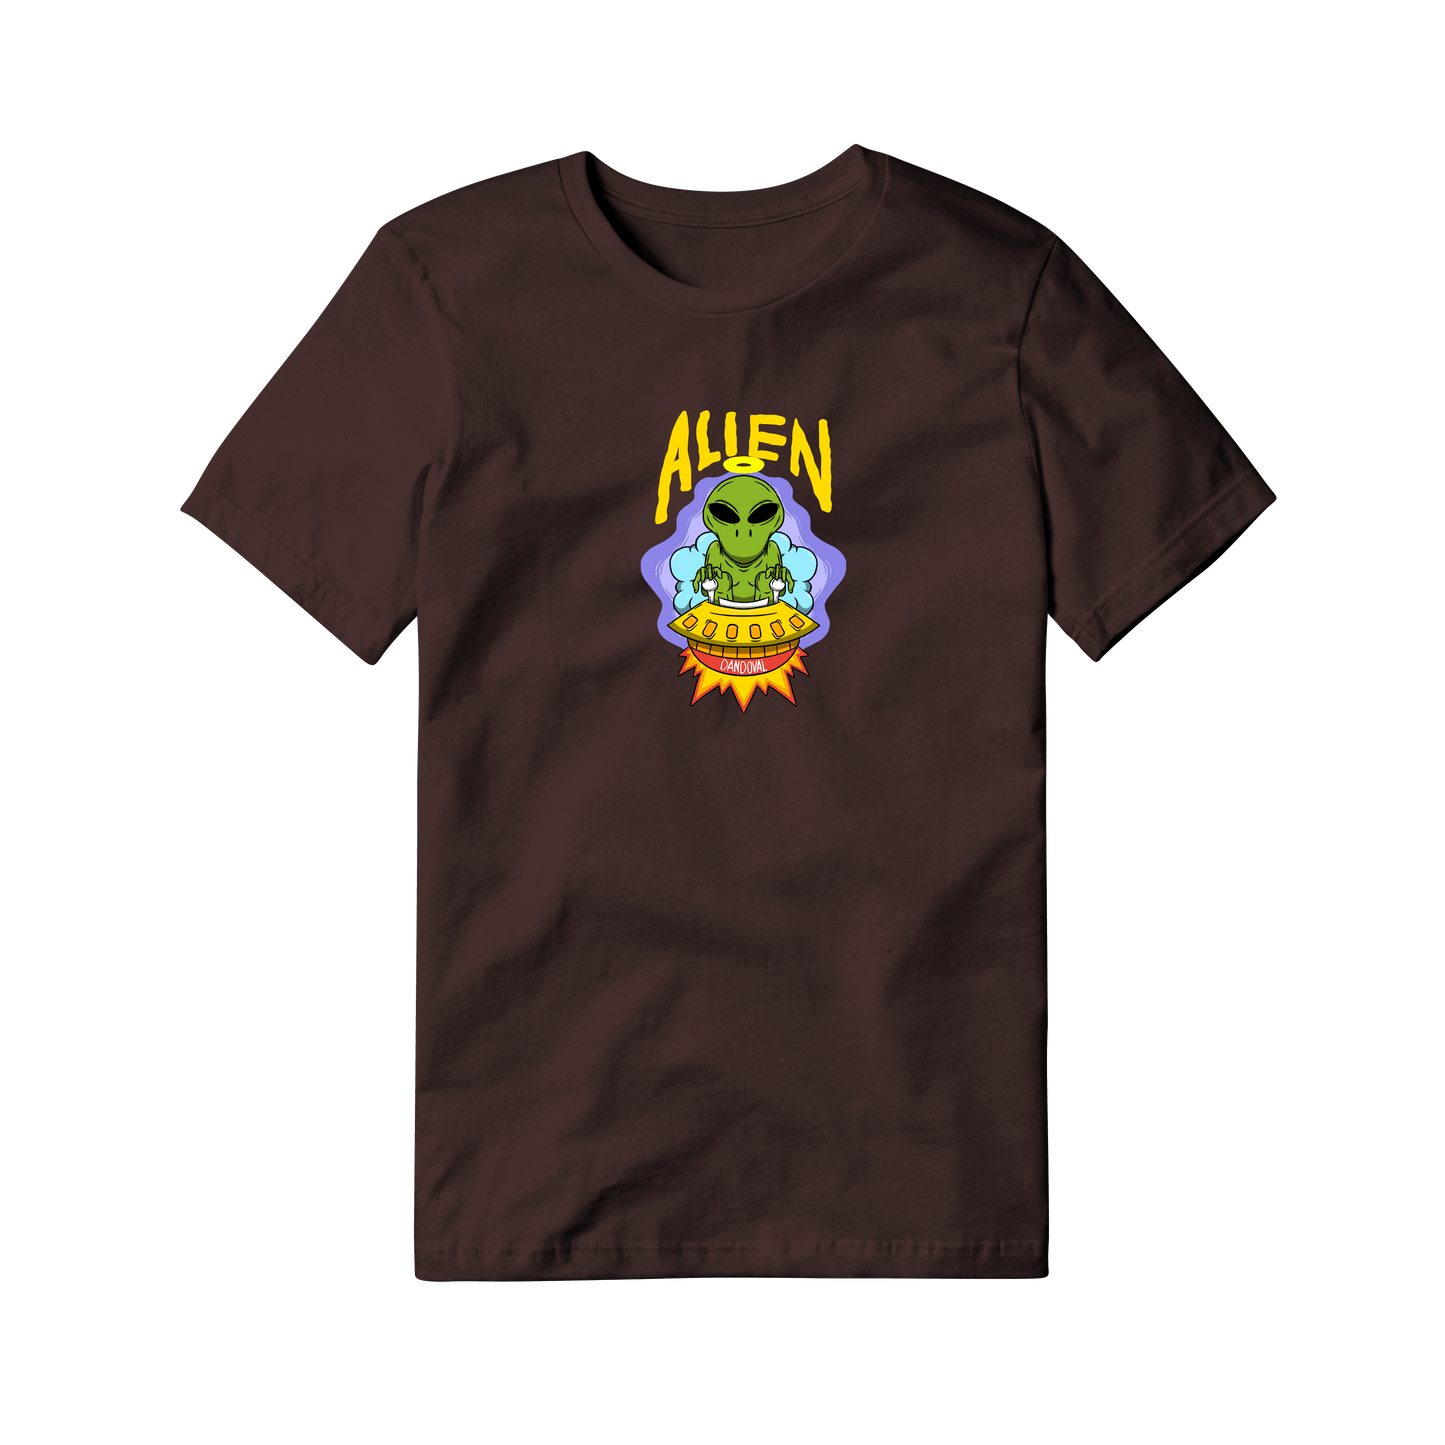 Alien | Dark Chocolate | T-Shirt